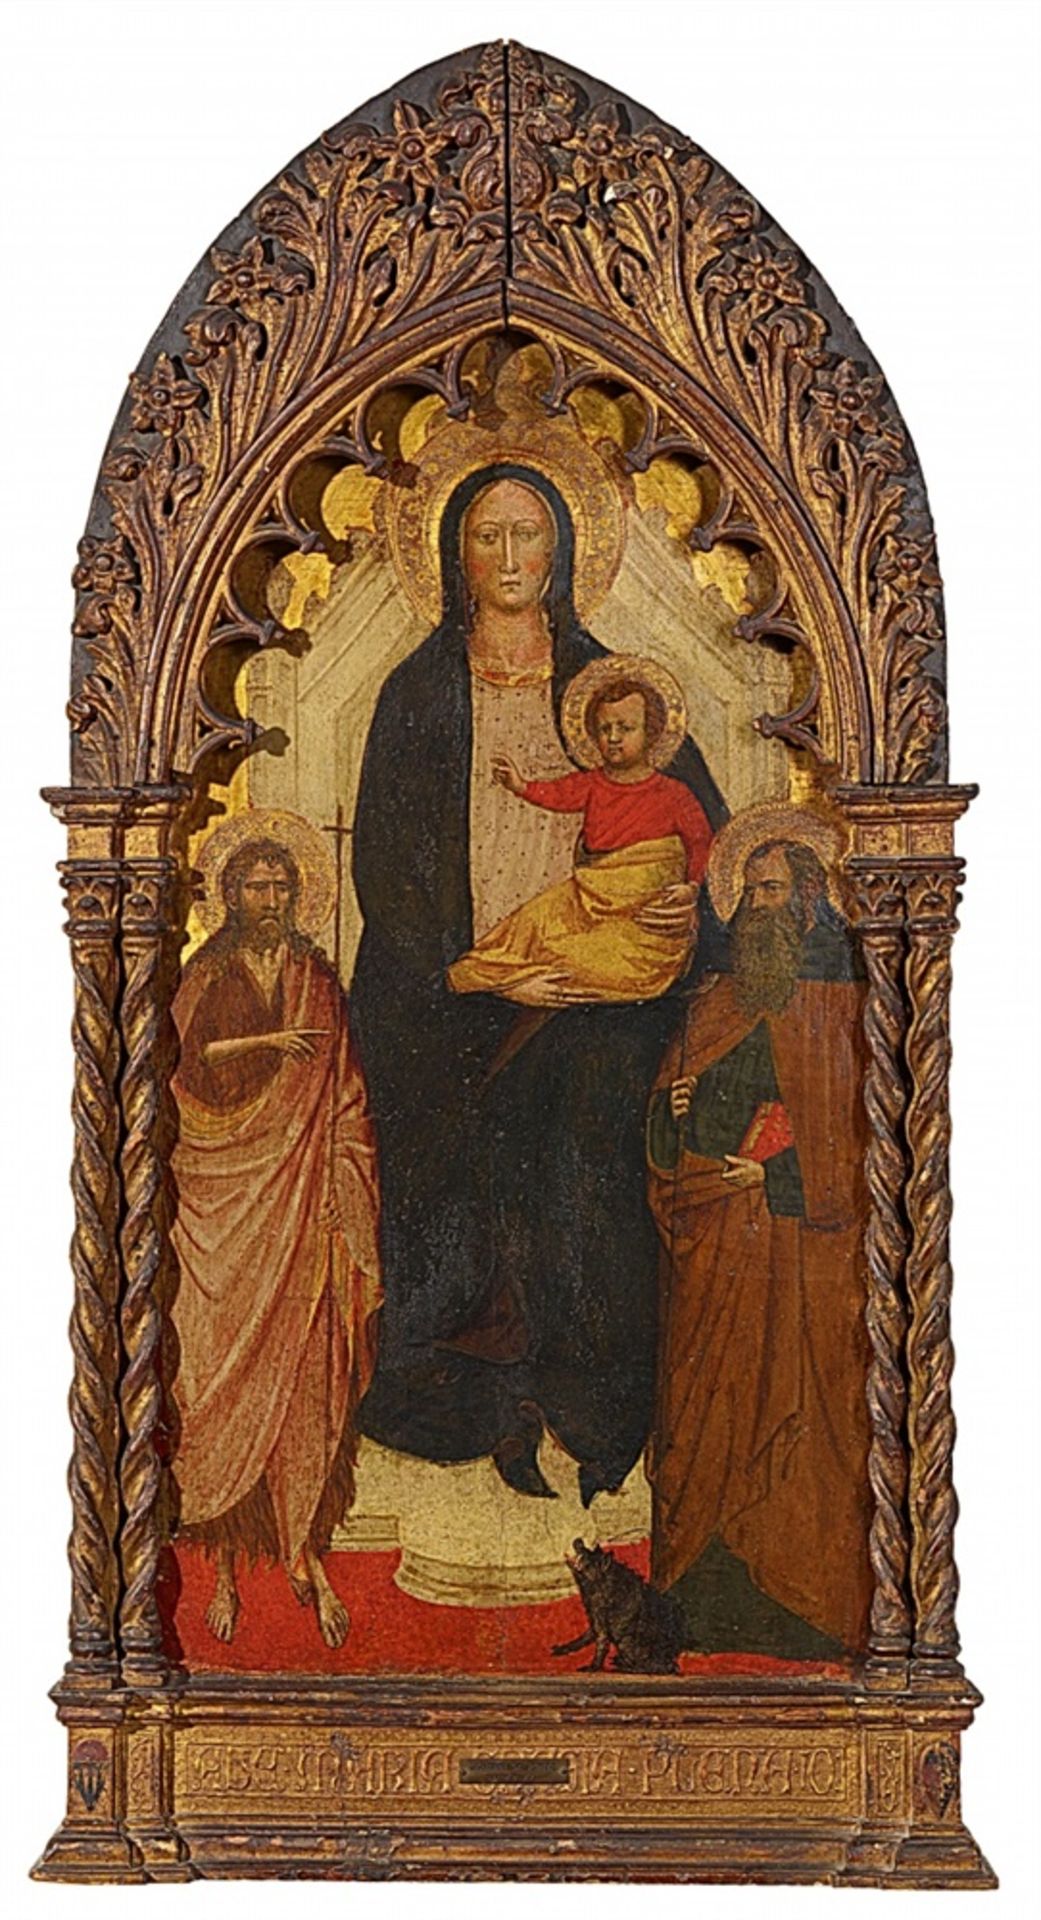 Jacopo di Cione, studio ofThe Virgin and Child with John the Baptist and Saint Antony the